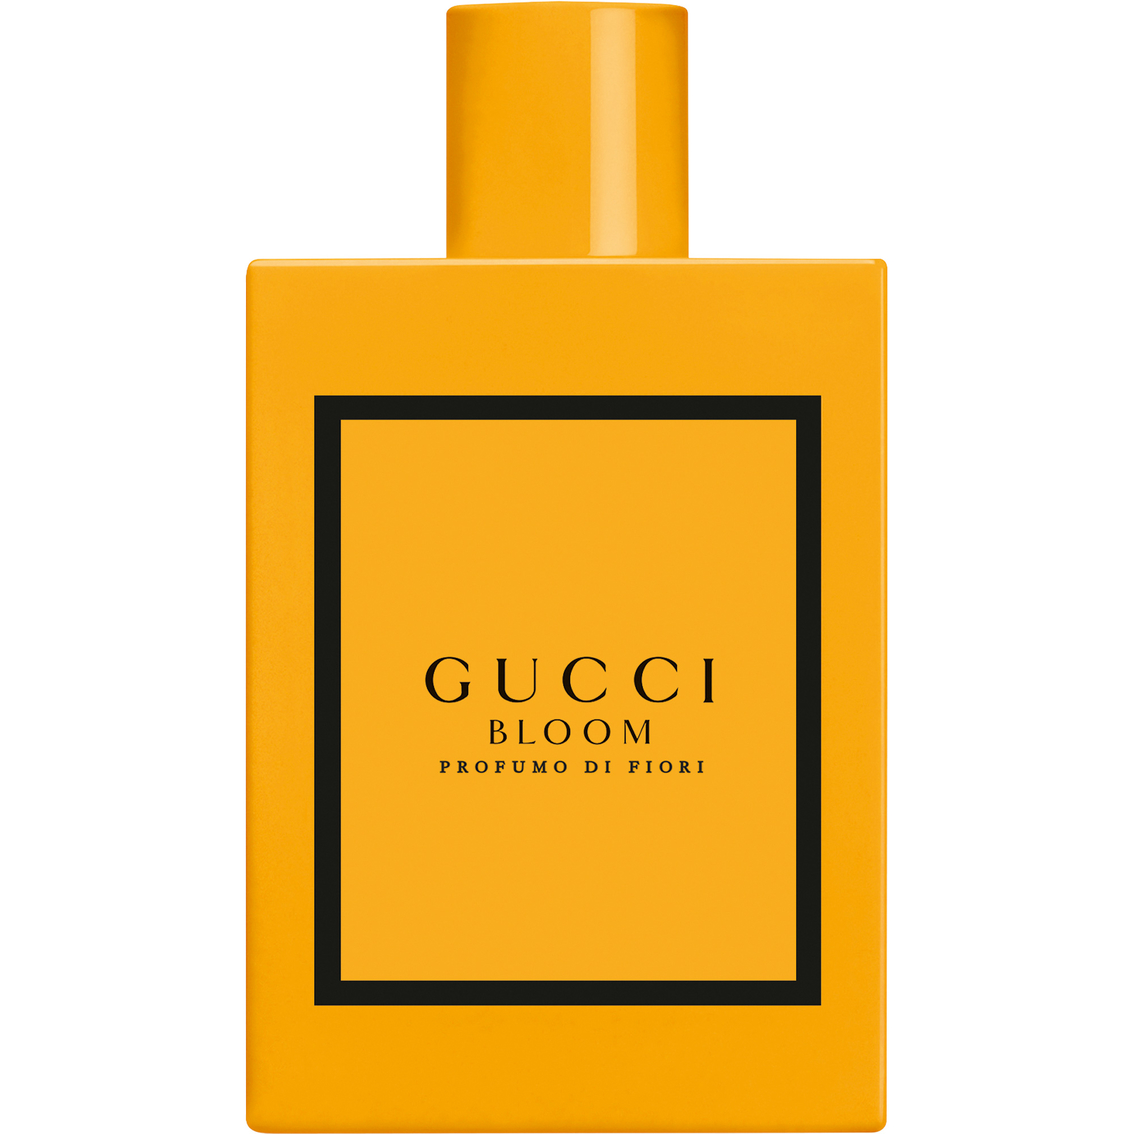 Gucci Bloom Profumo Di Fiori Eau De Parfum | Women's Fragrances